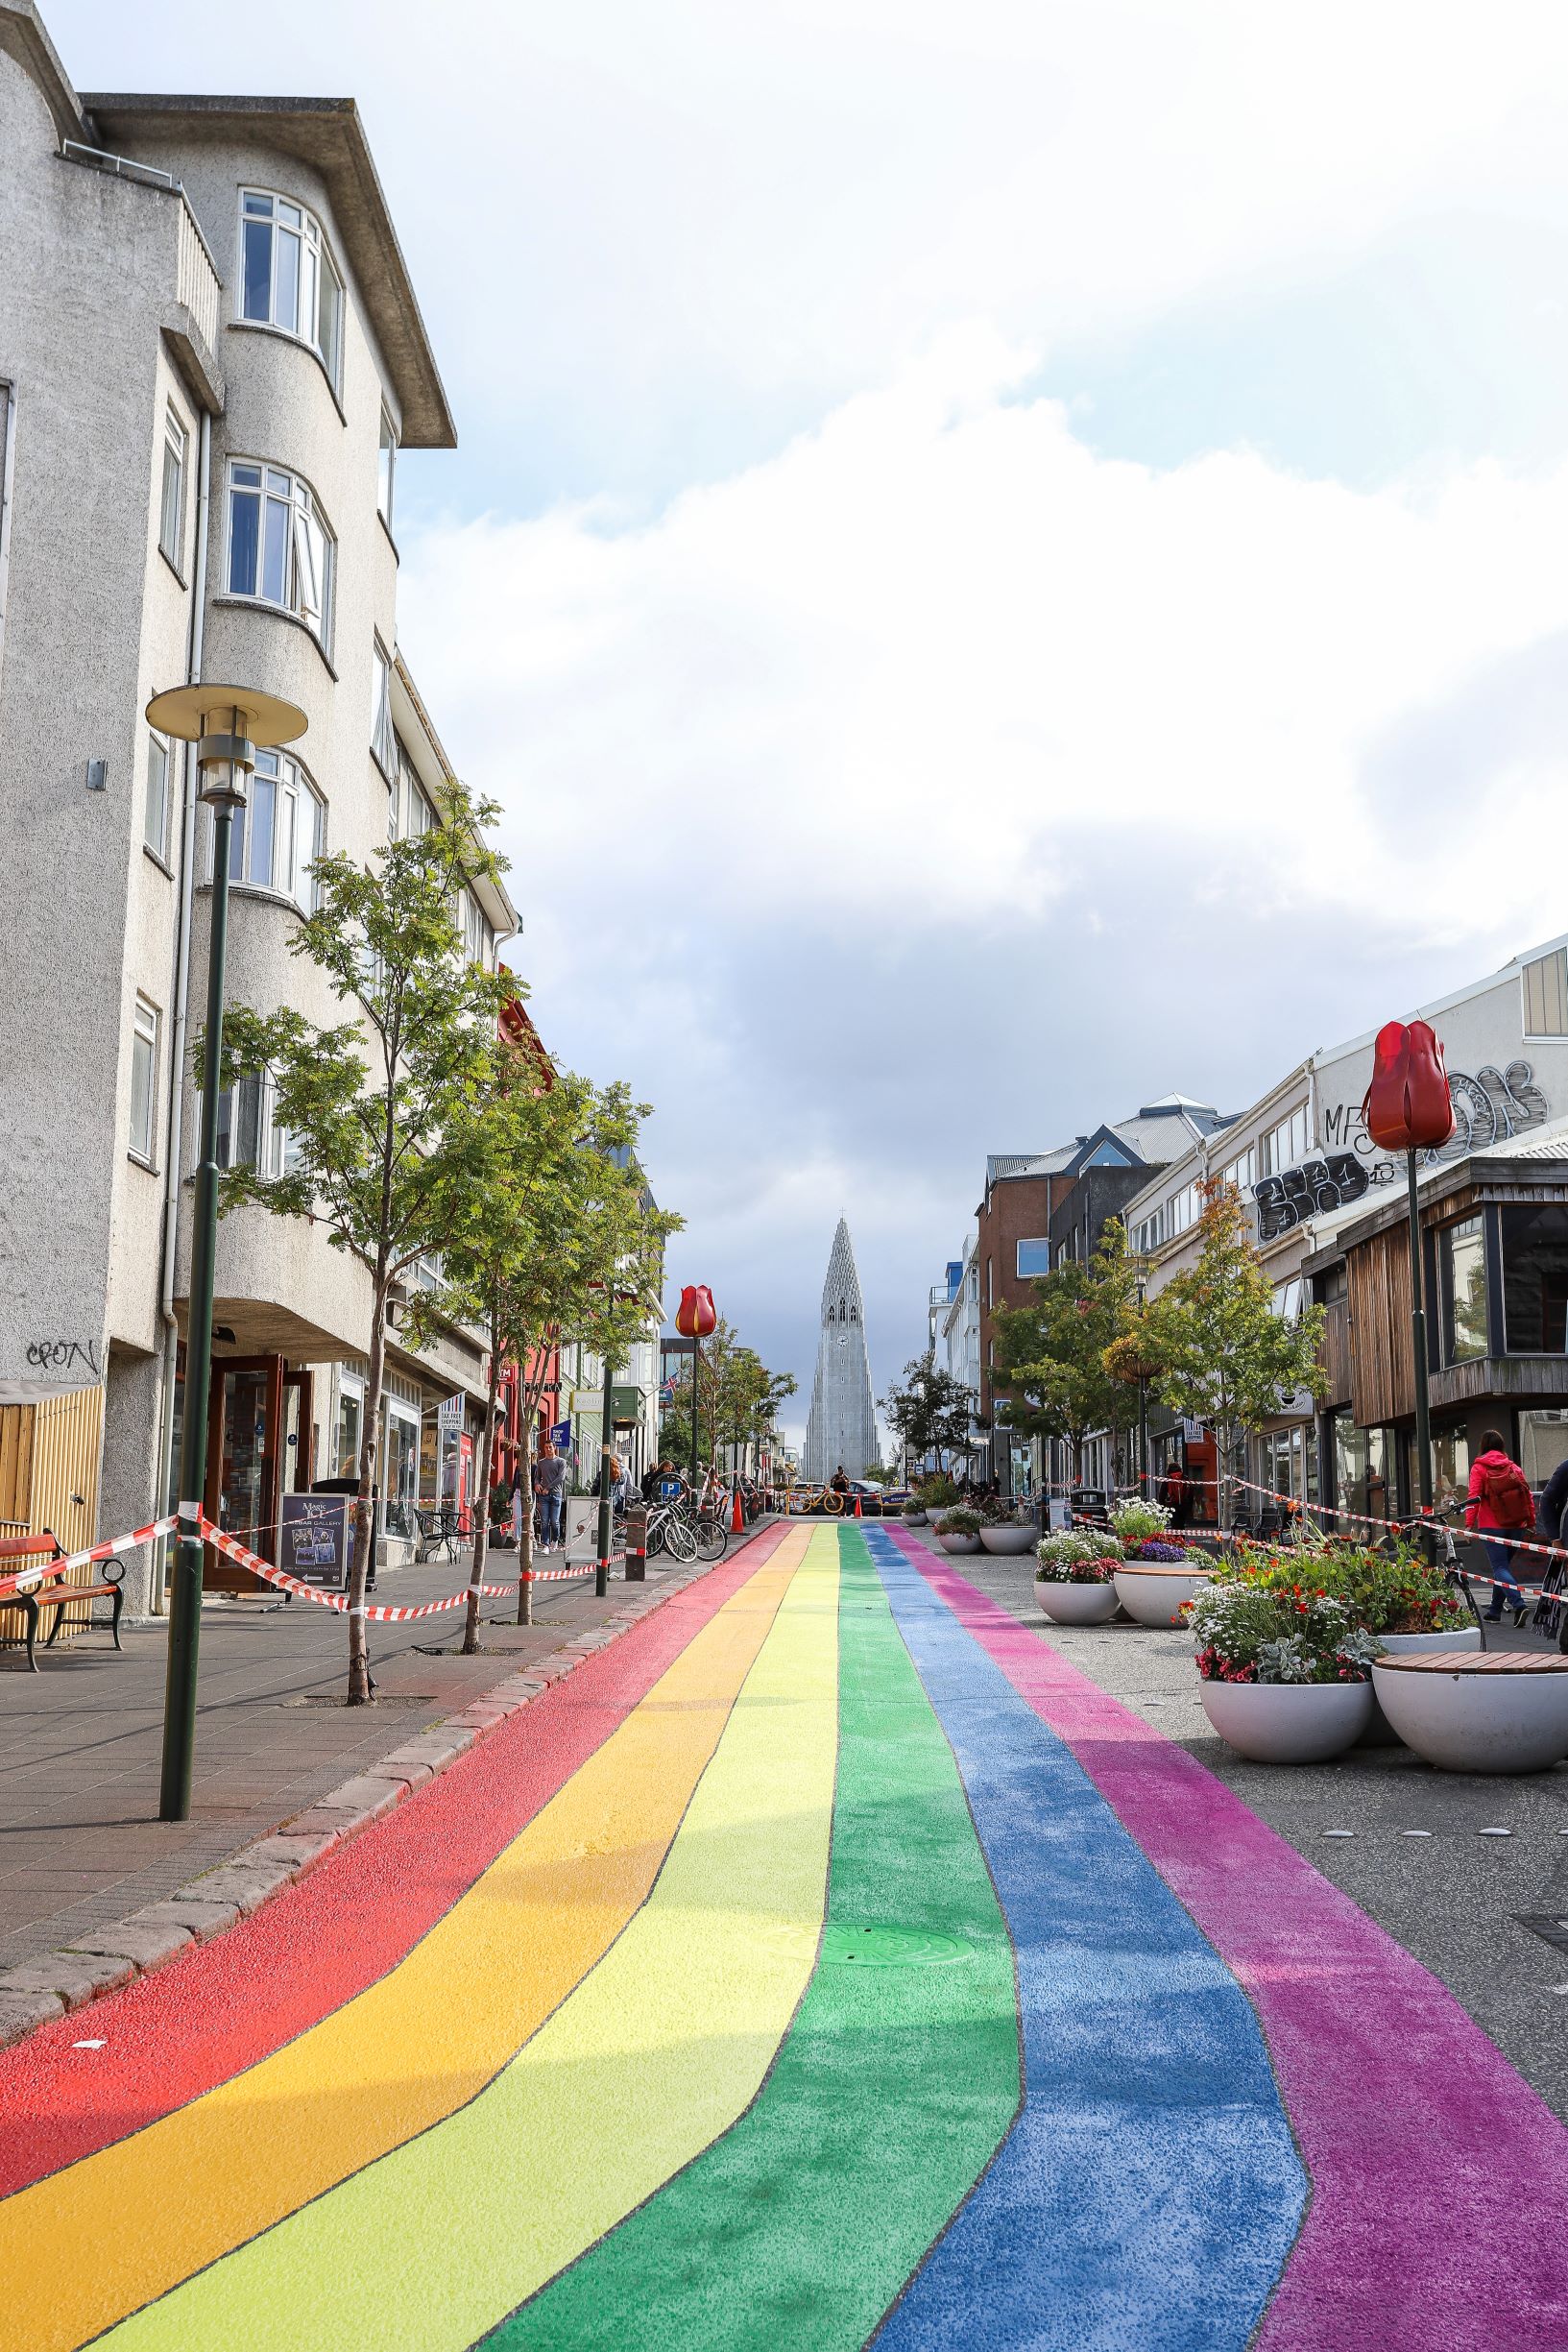 Skólavörðustígur, in downtown Reykjavik, pictured with the rainbow street looking up the street to Hallgrimskirkja